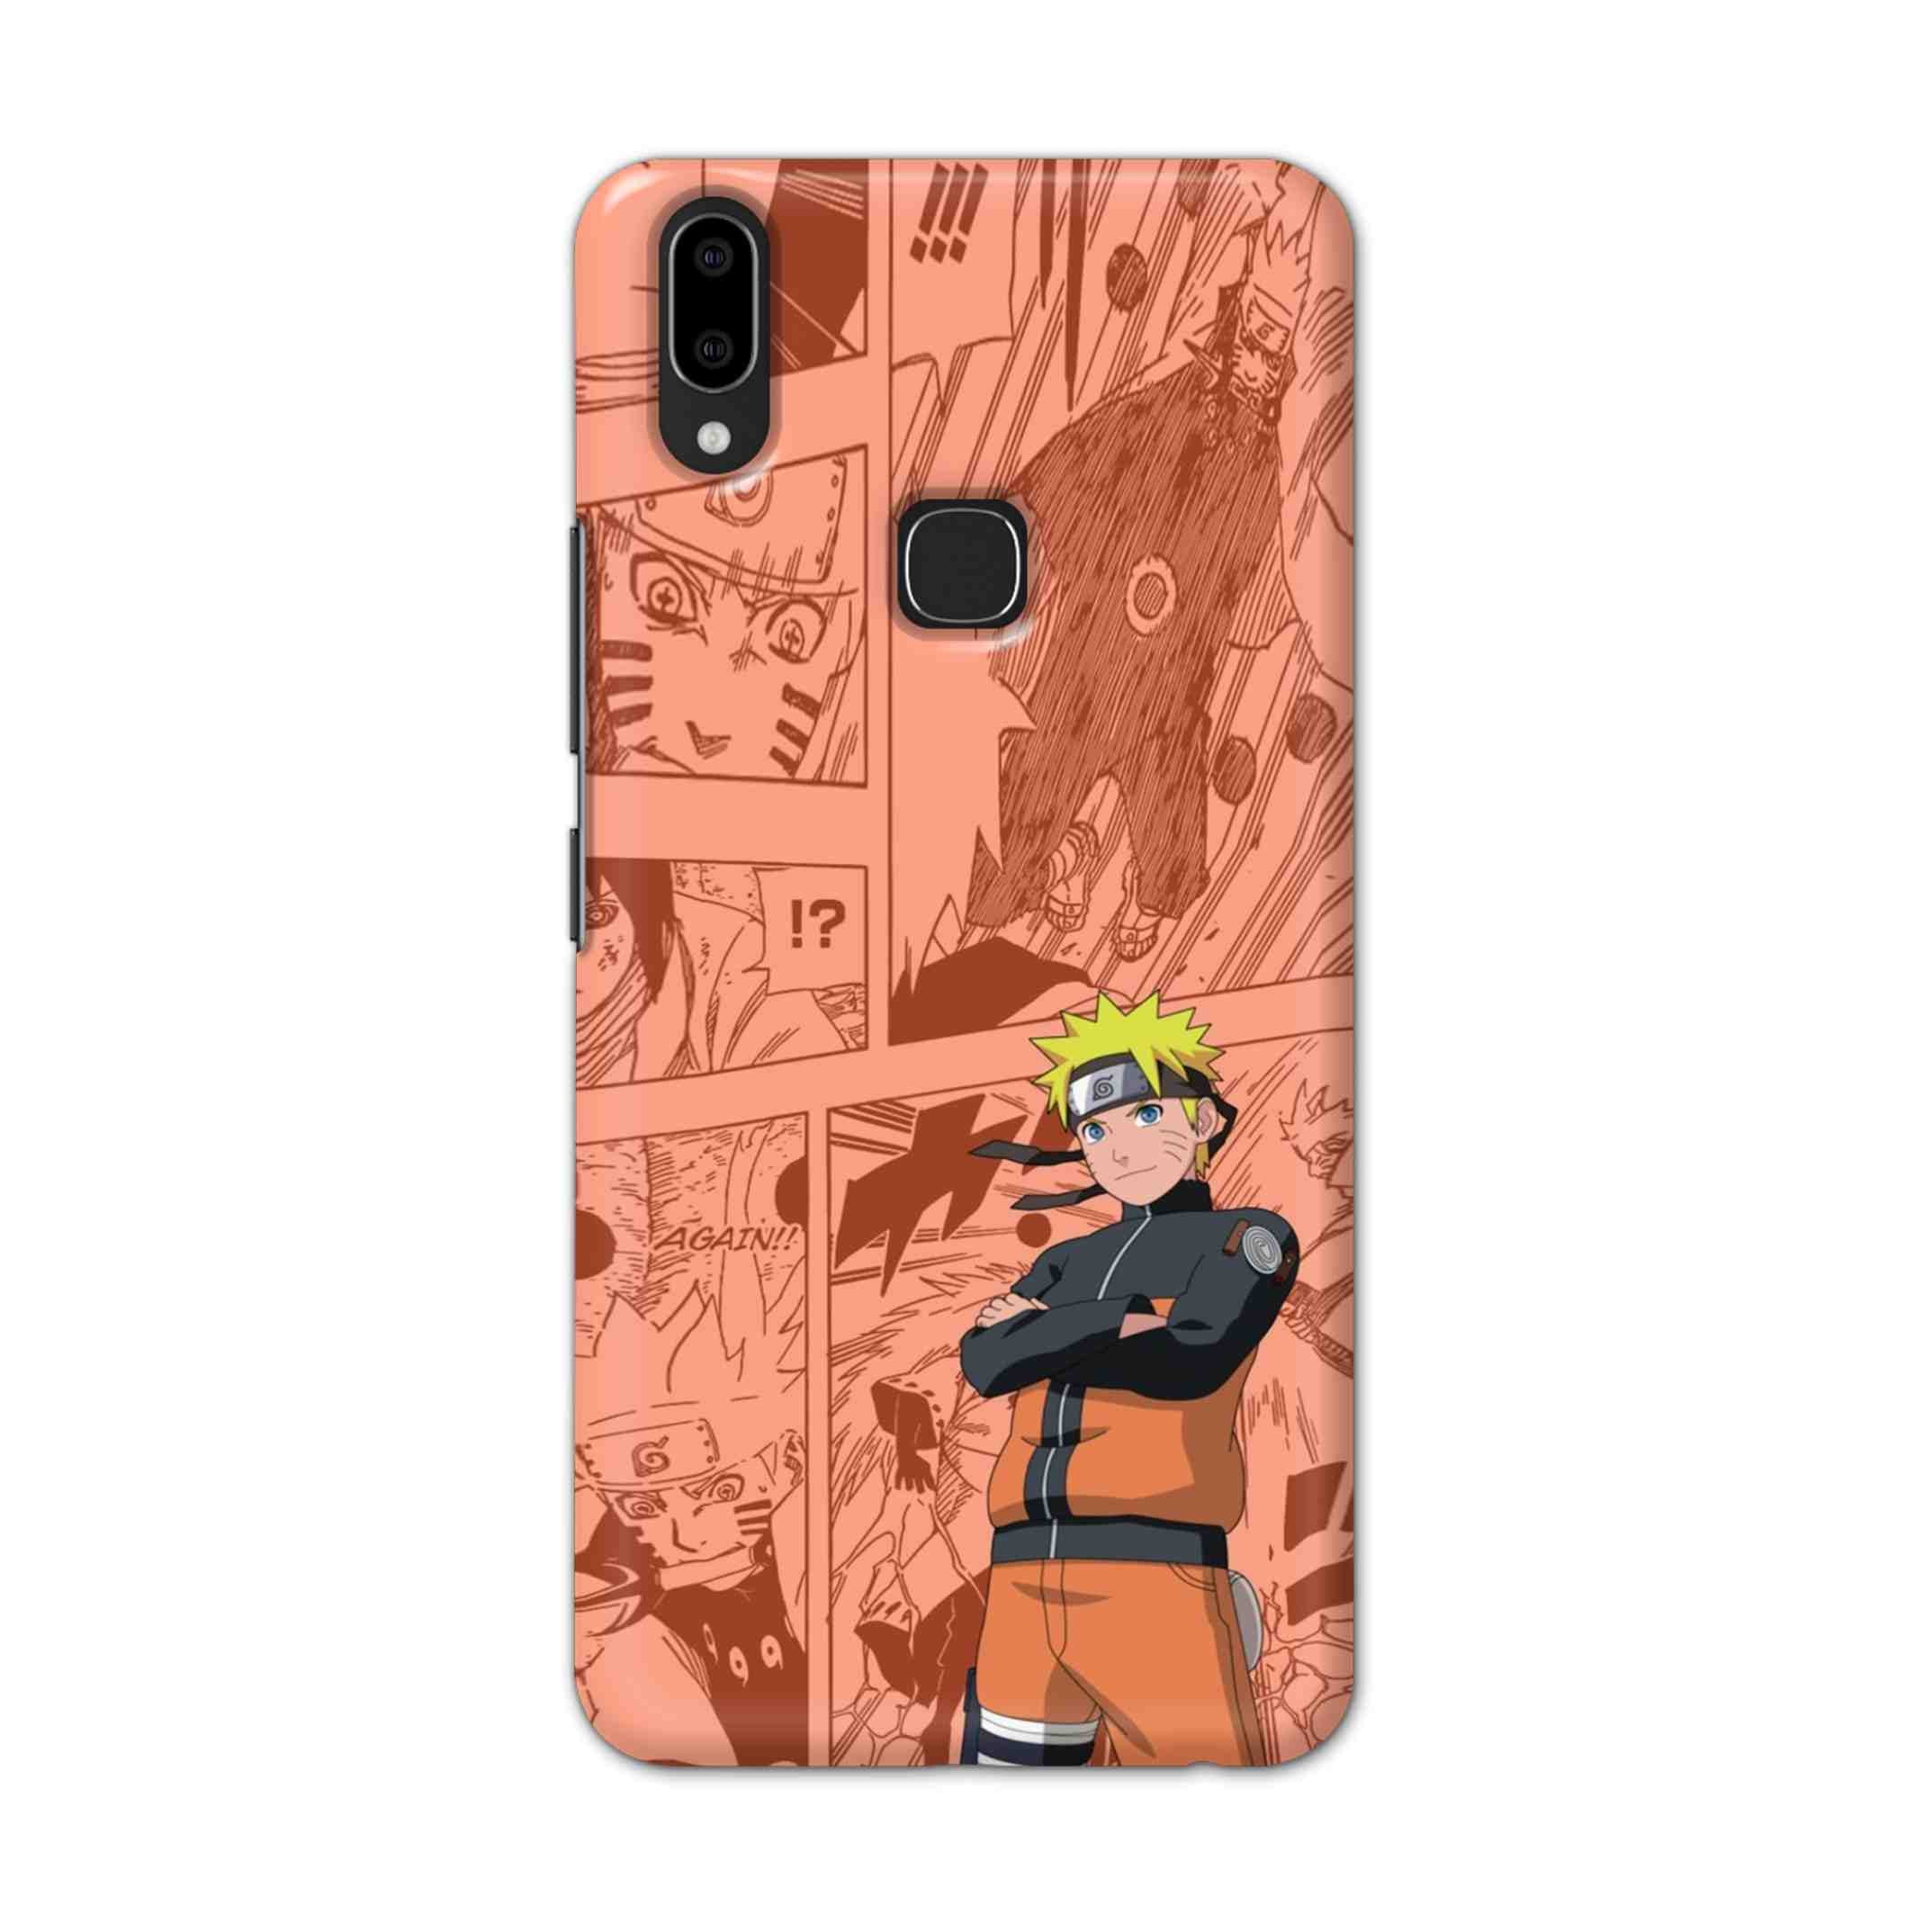 Buy Naruto Hard Back Mobile Phone Case Cover For Vivo V9 / V9 Youth Online